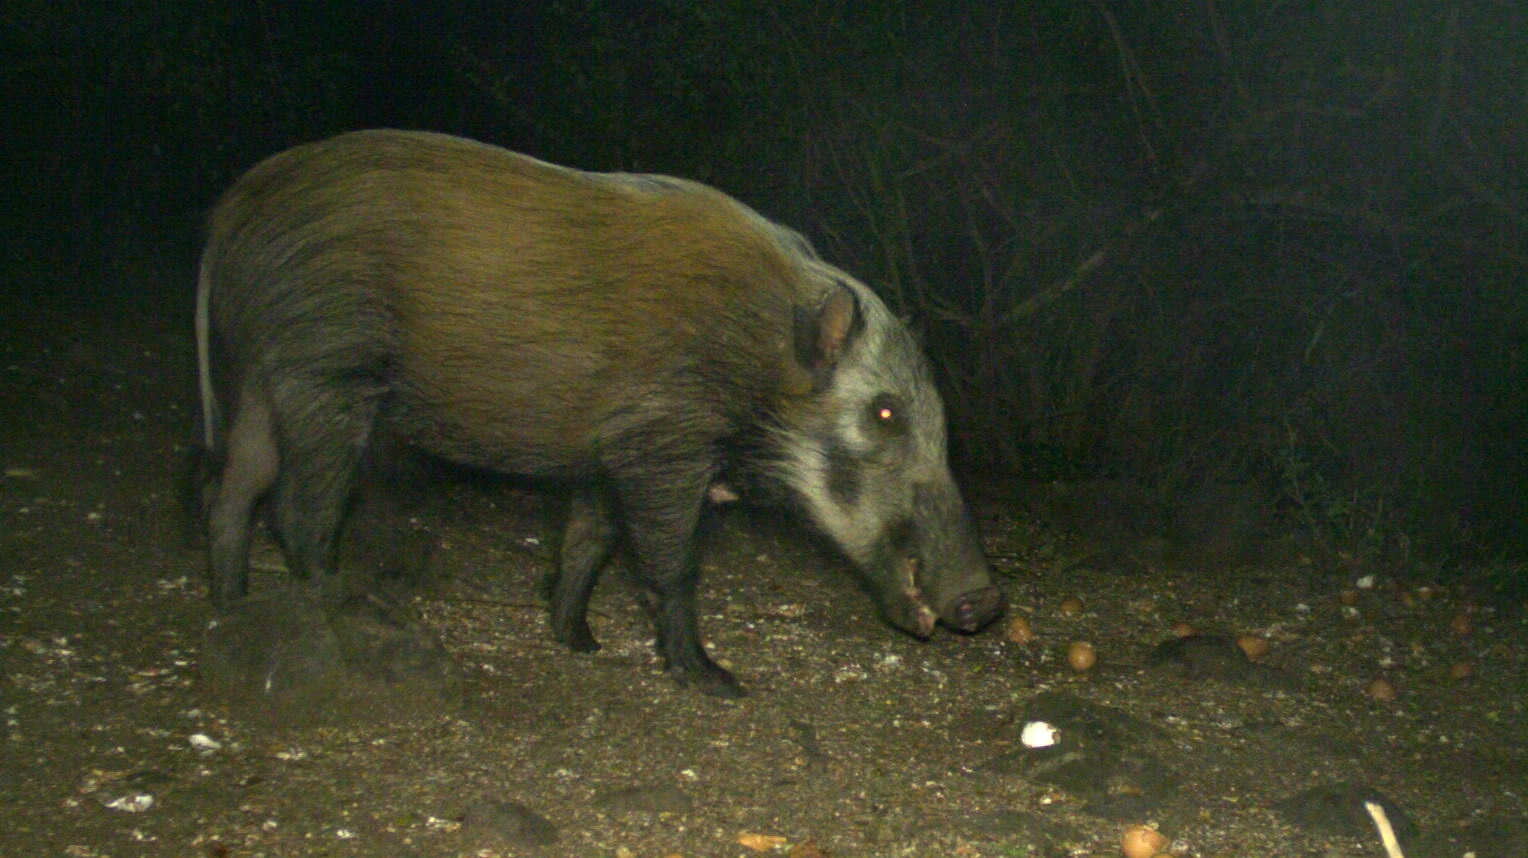 Image of Bush-pig